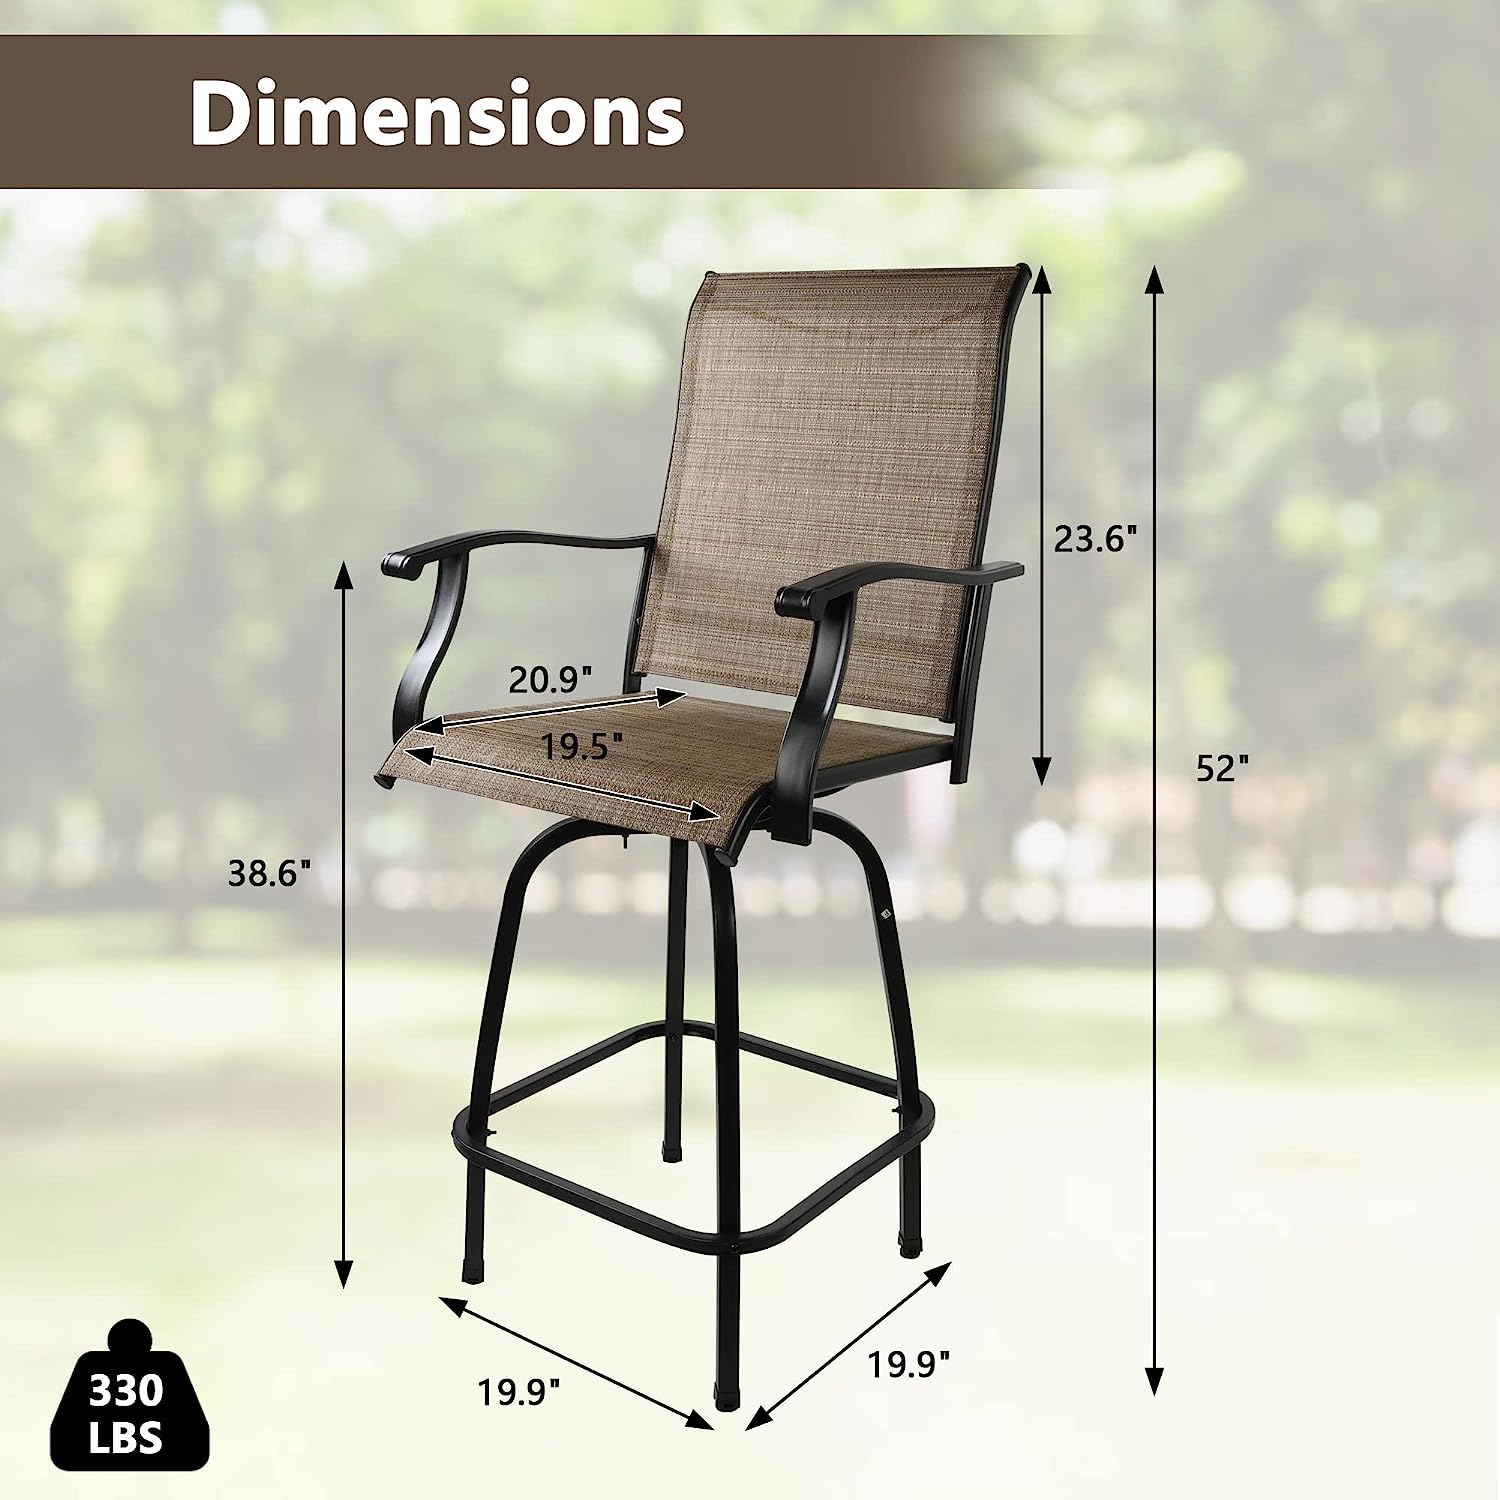 2 Pcs Outdoor  Swivel Bar Stools, Height Patio Bar Chair with High Back, Armrest & Breathable Textilene Fabric